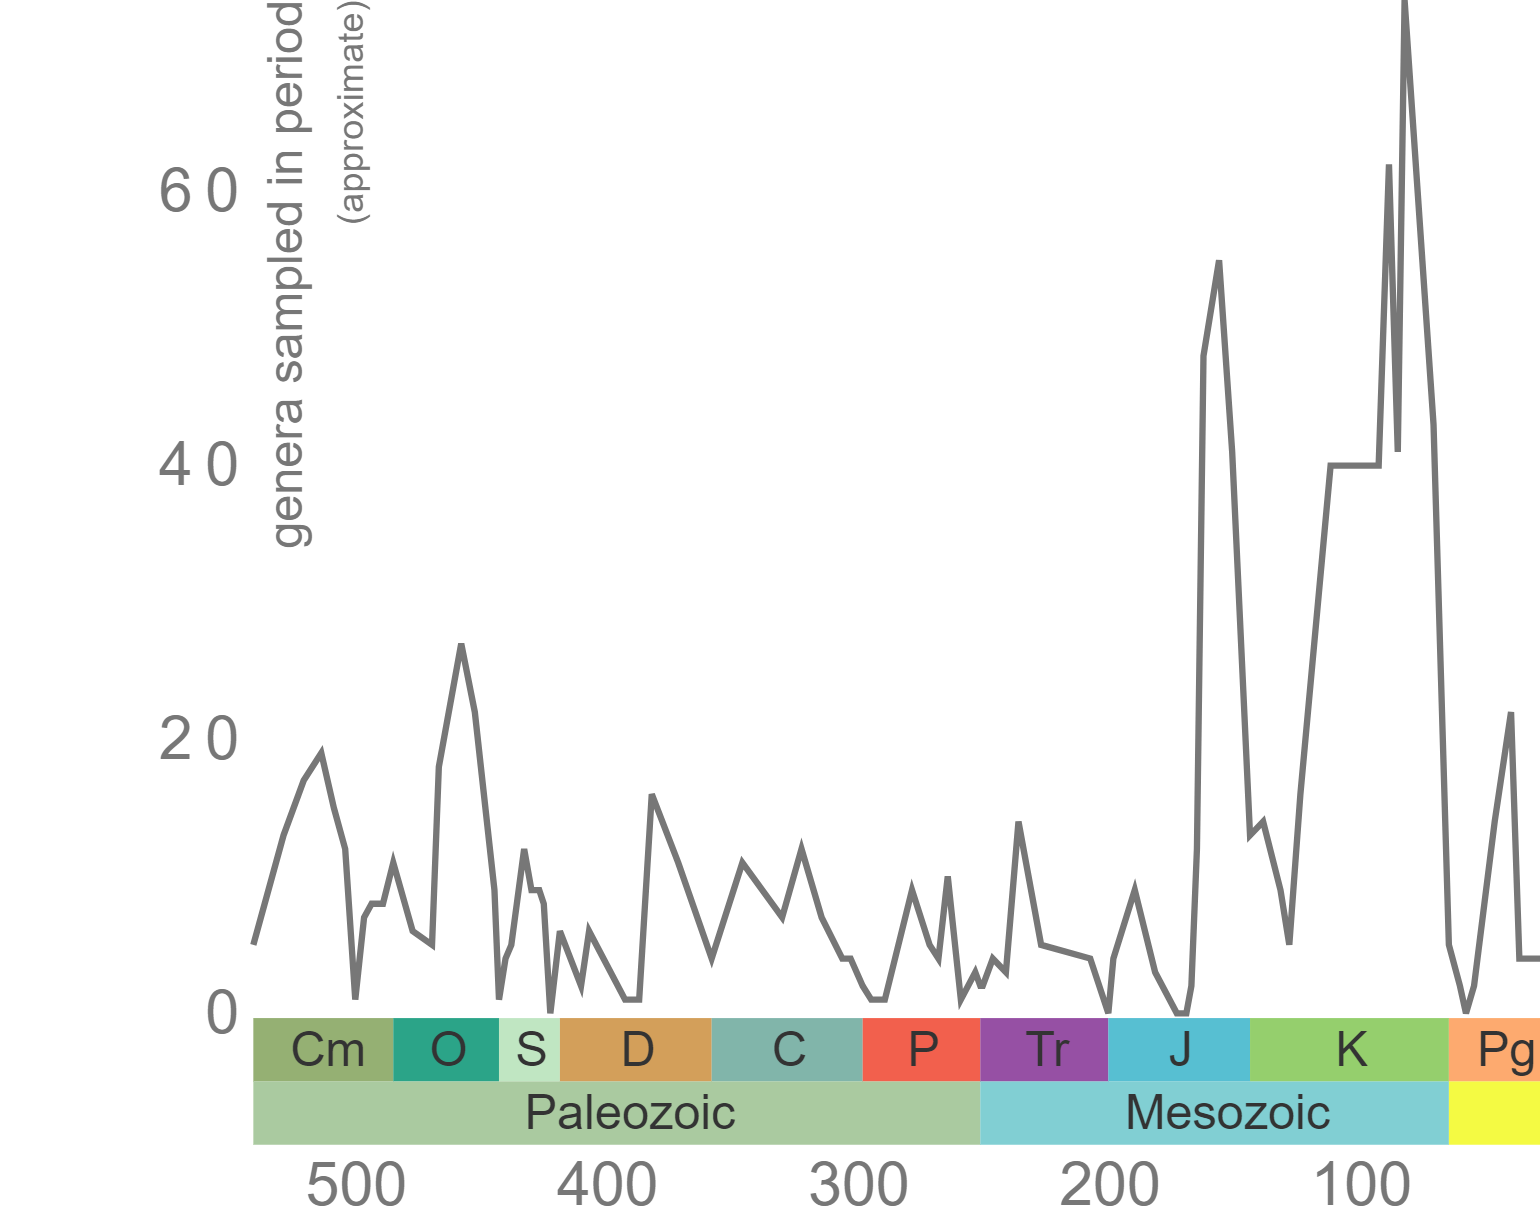 Graph of Phanerozoic genus-level diversity of Hexactinellida